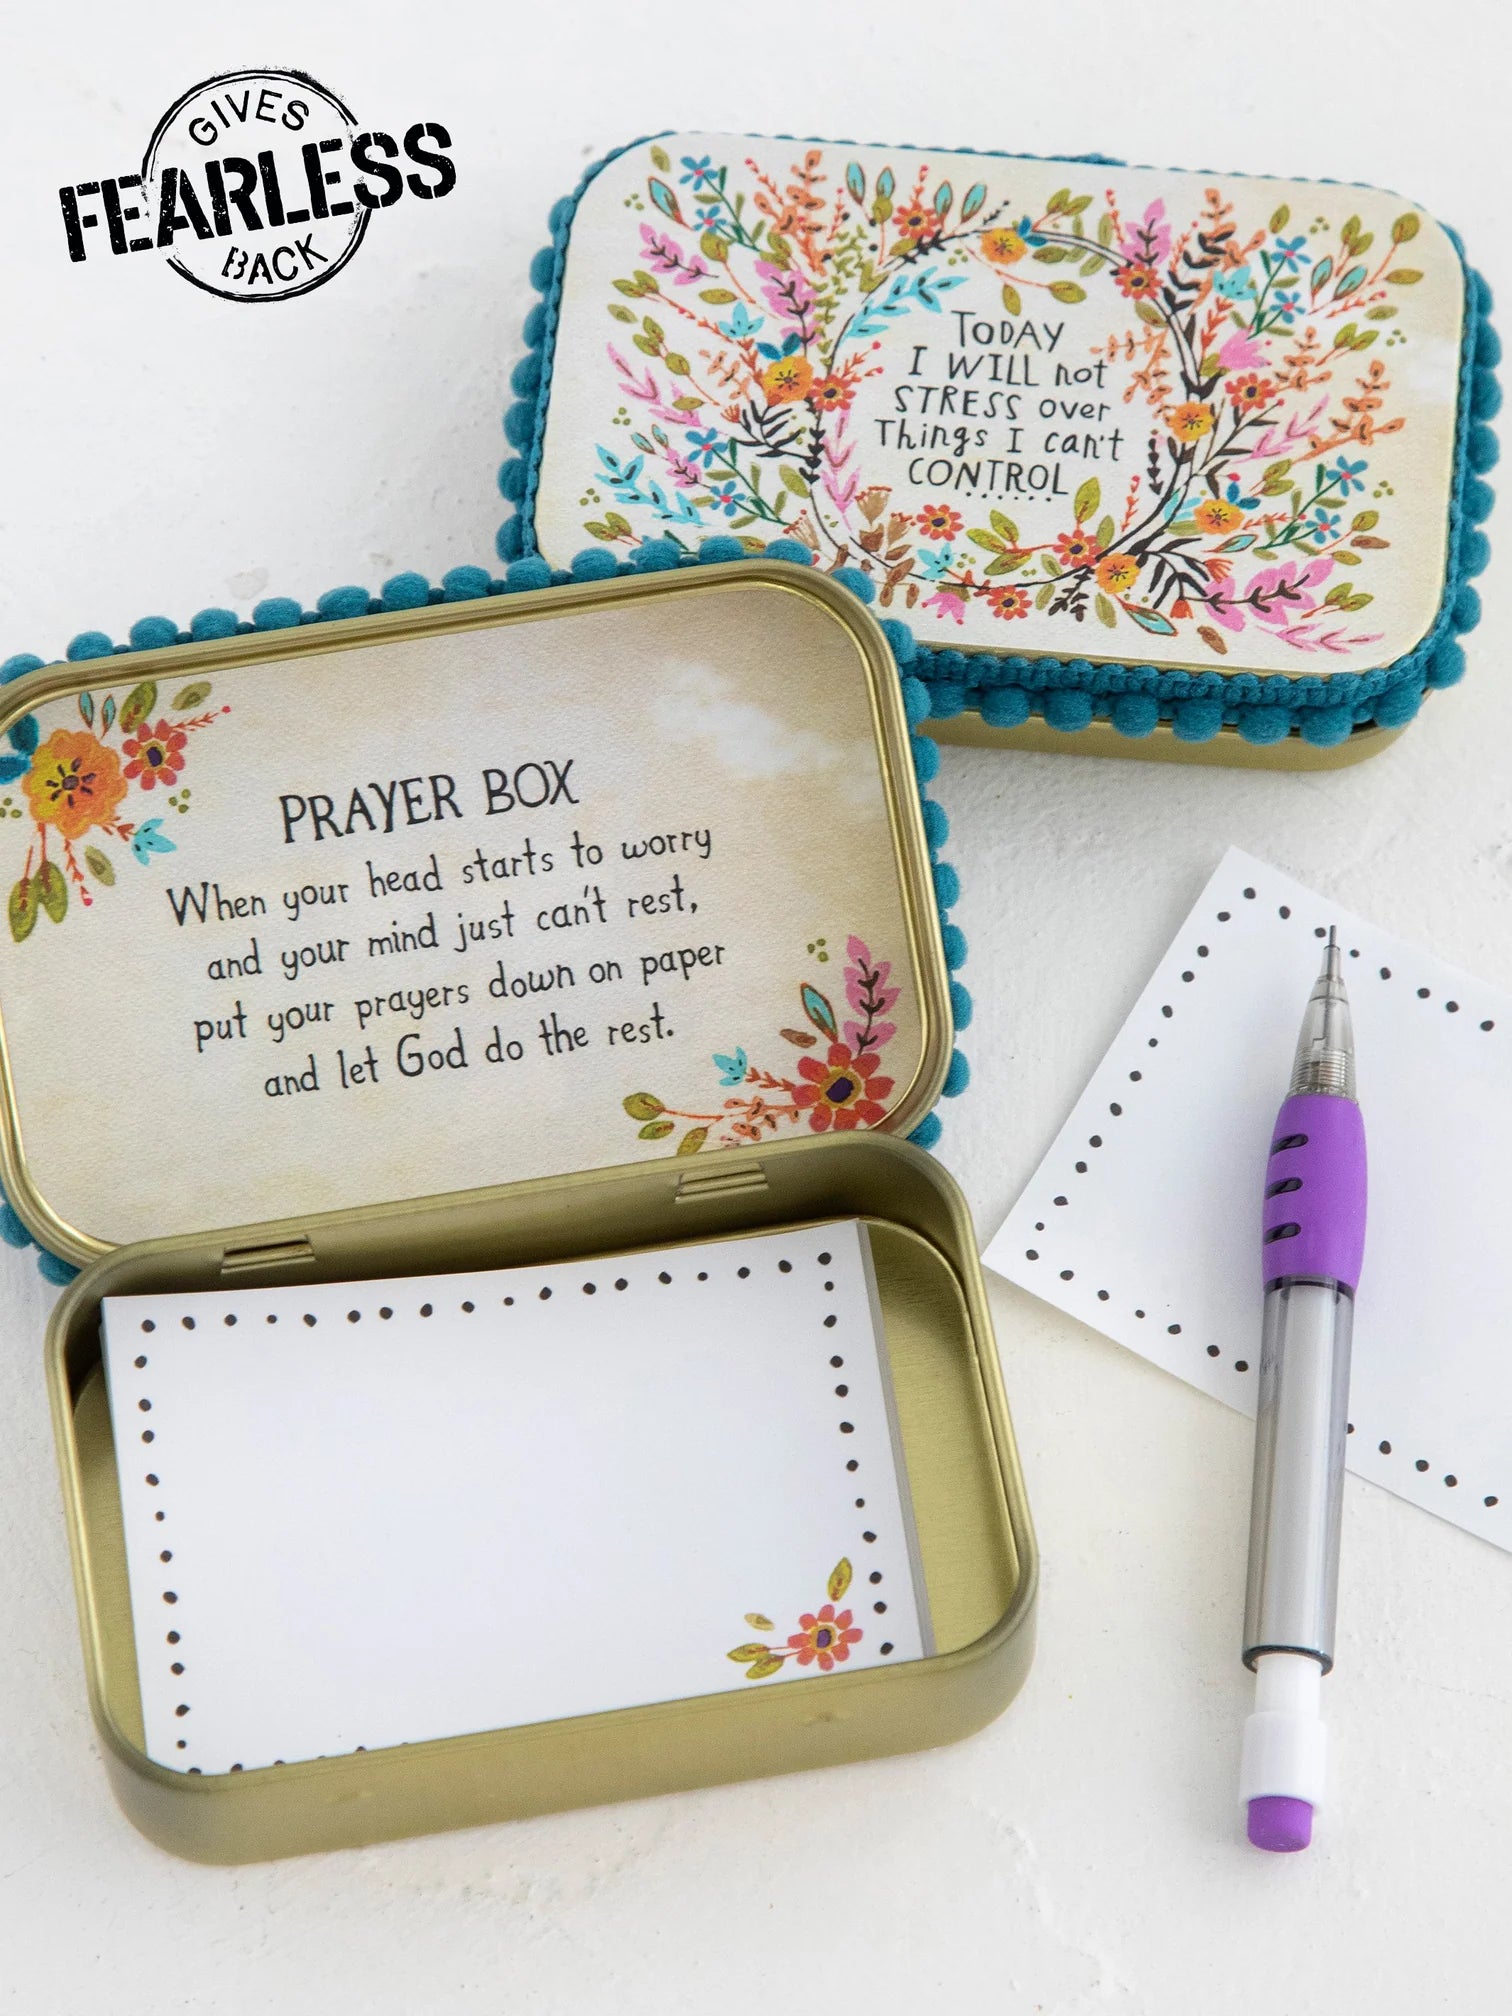 Tin Prayer Box - Will Not Stress